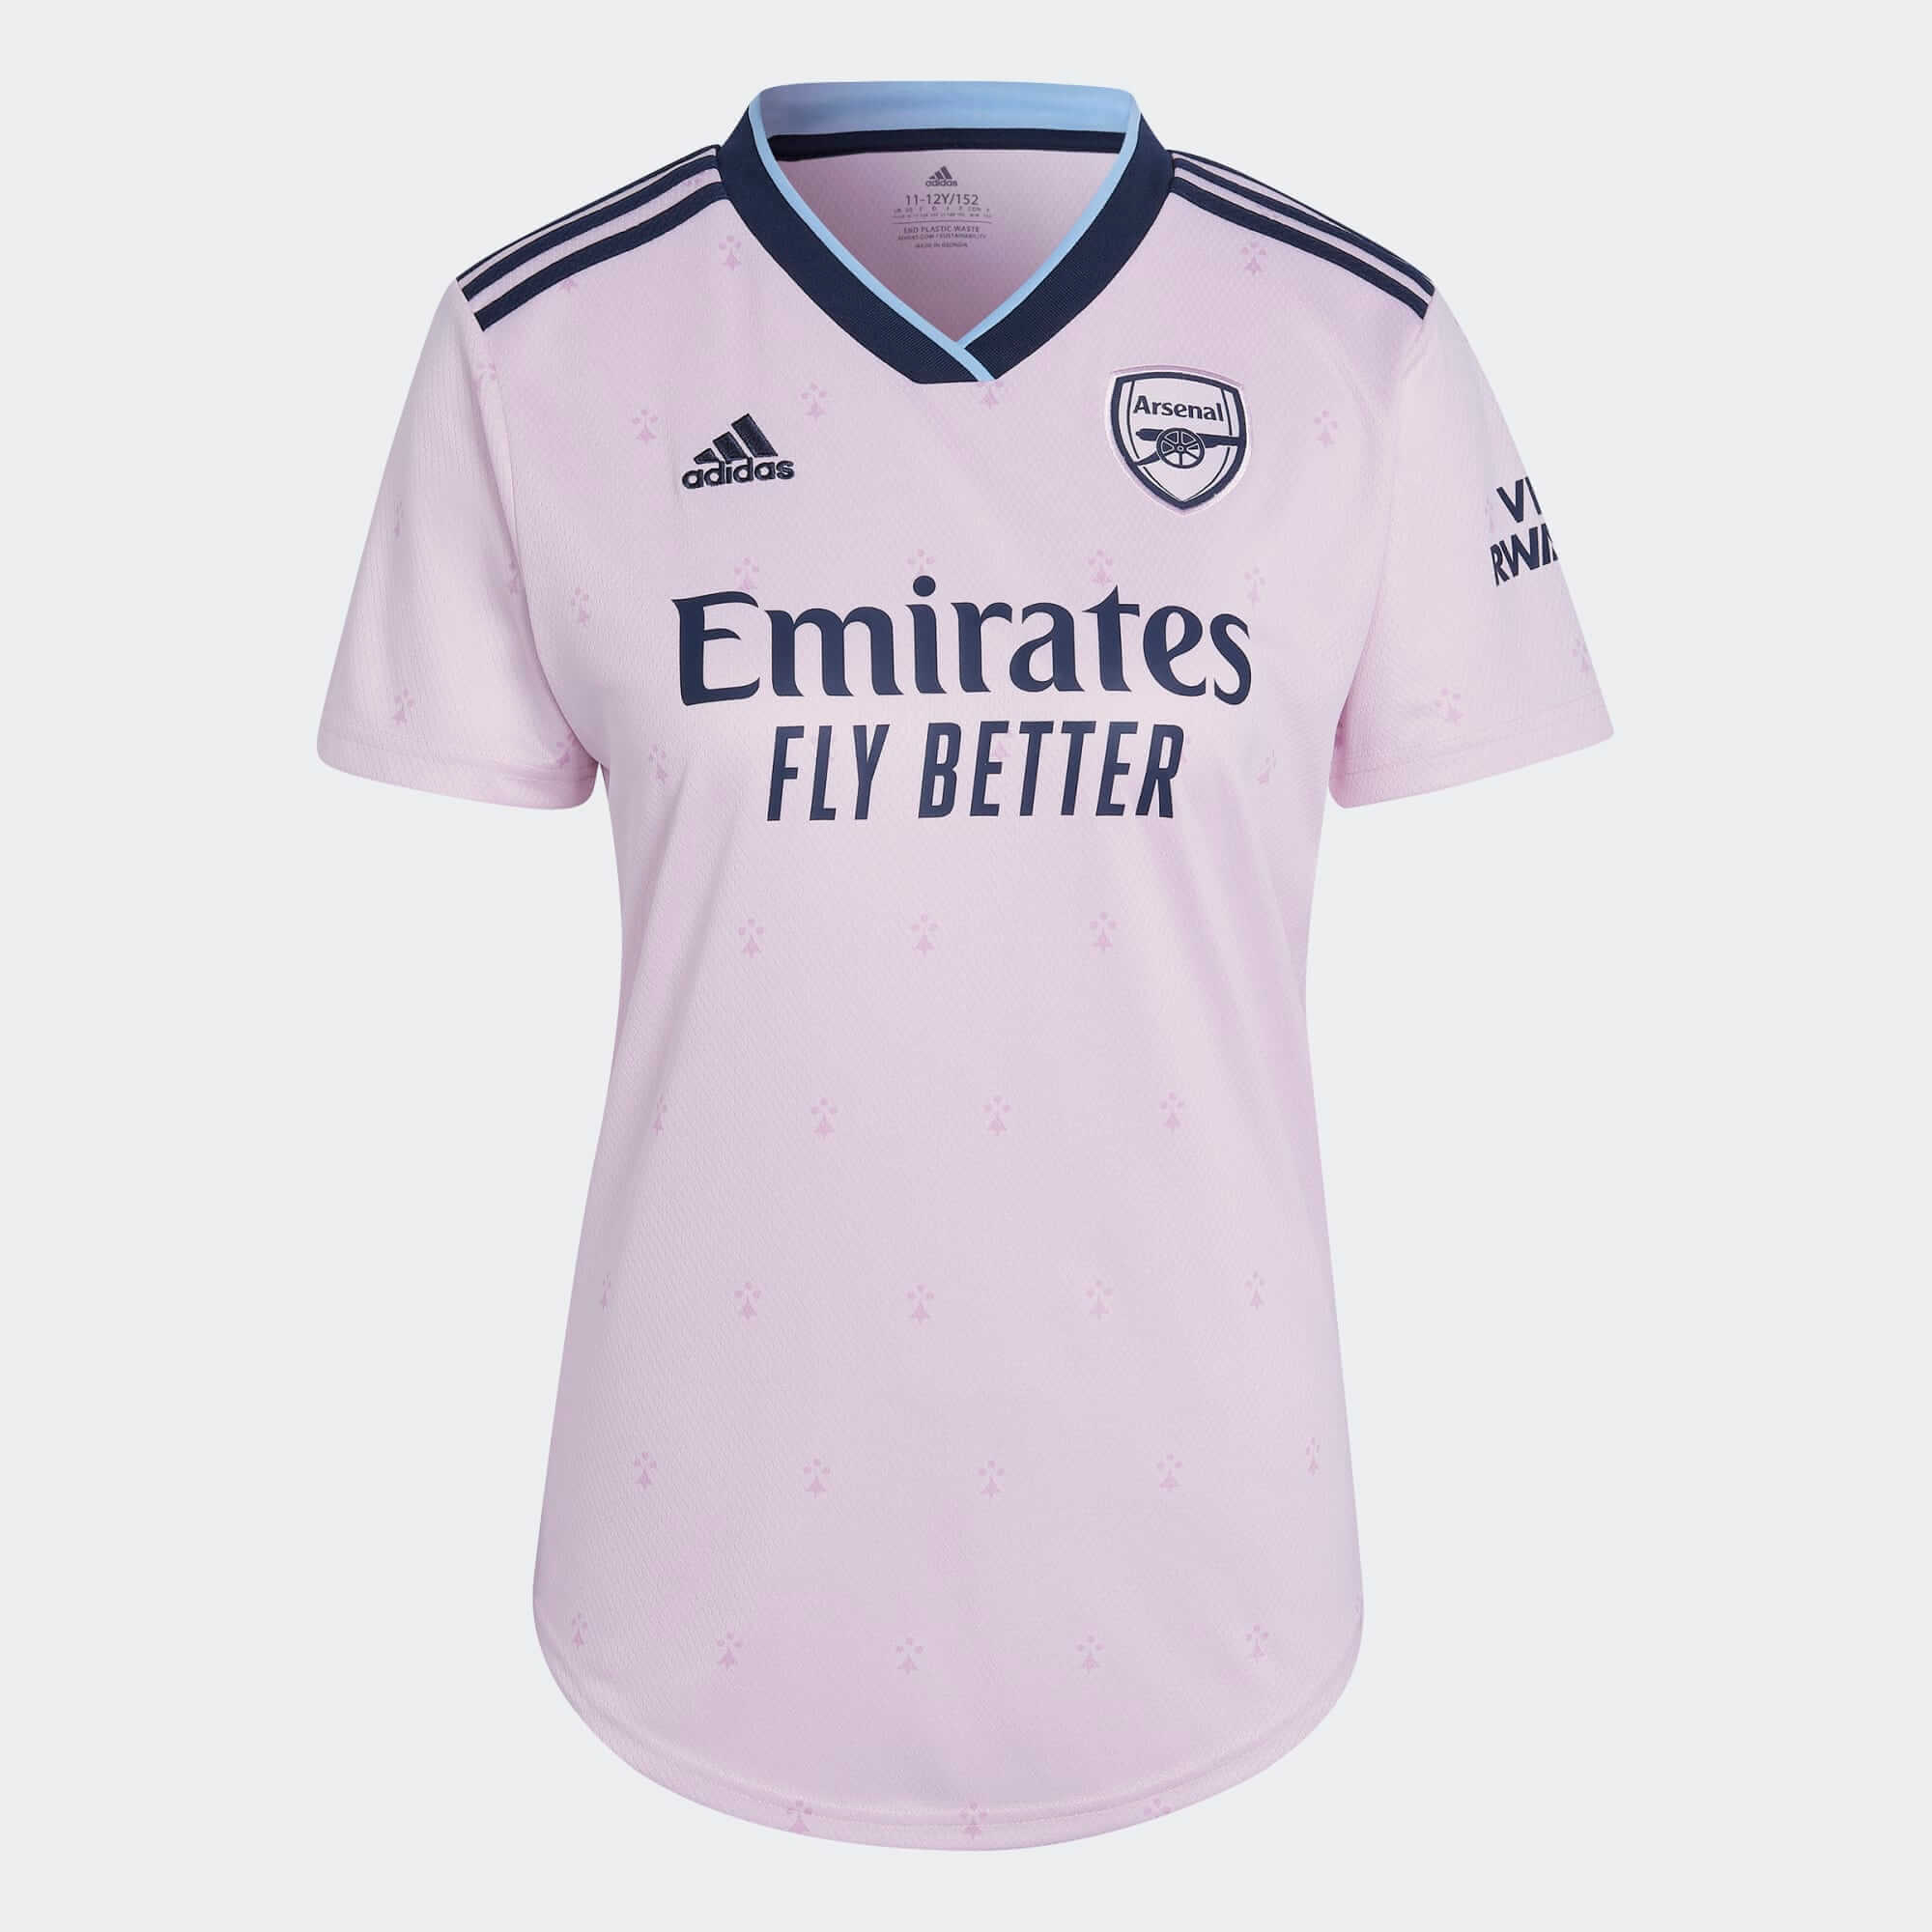 arsenal women's pink shirt